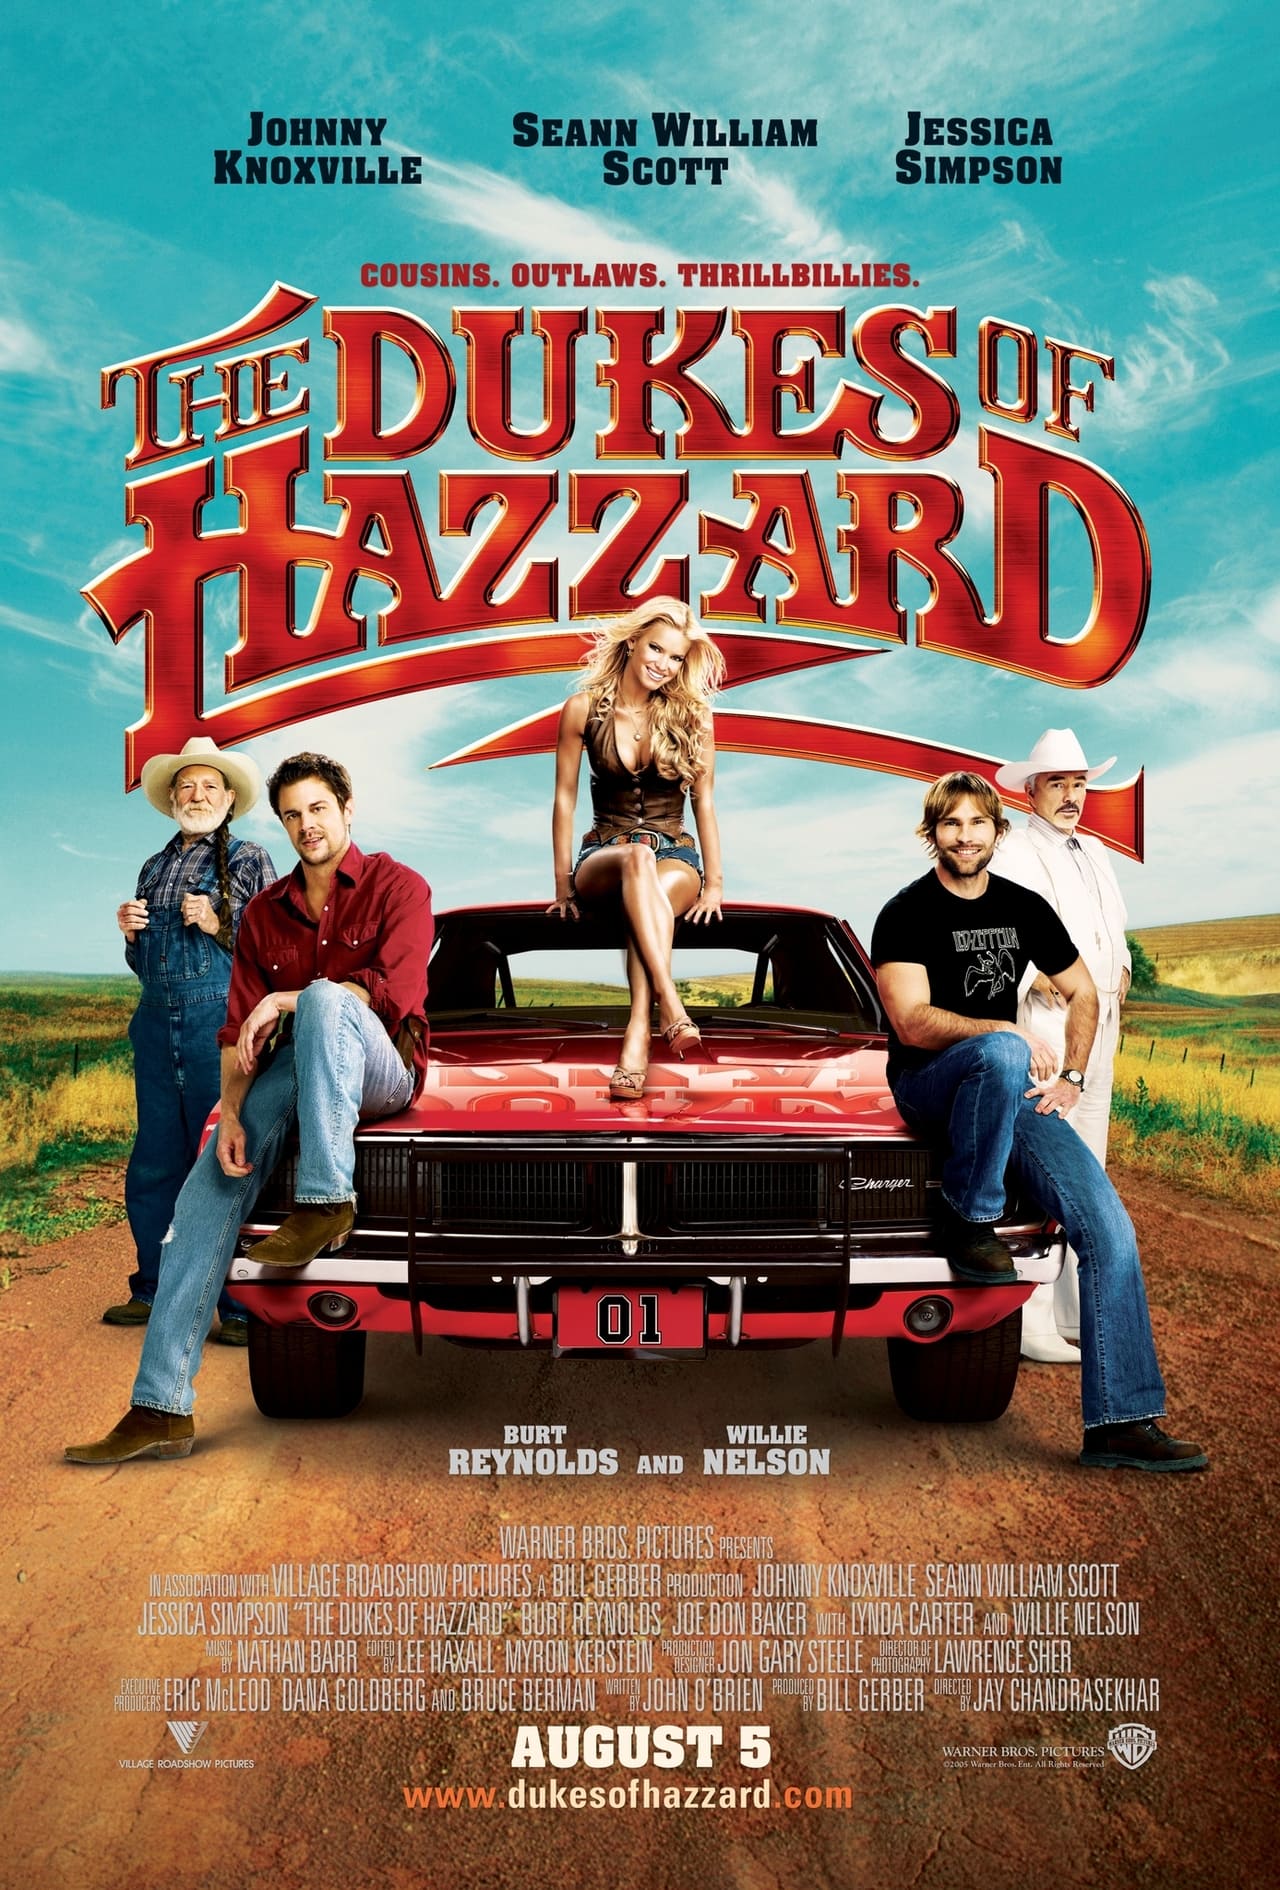 The Dukes of Hazzard (2005) Theatrical Cut 384Kbps 24Fps 48Khz 5.1Ch iTunes Turkish Audio TAC